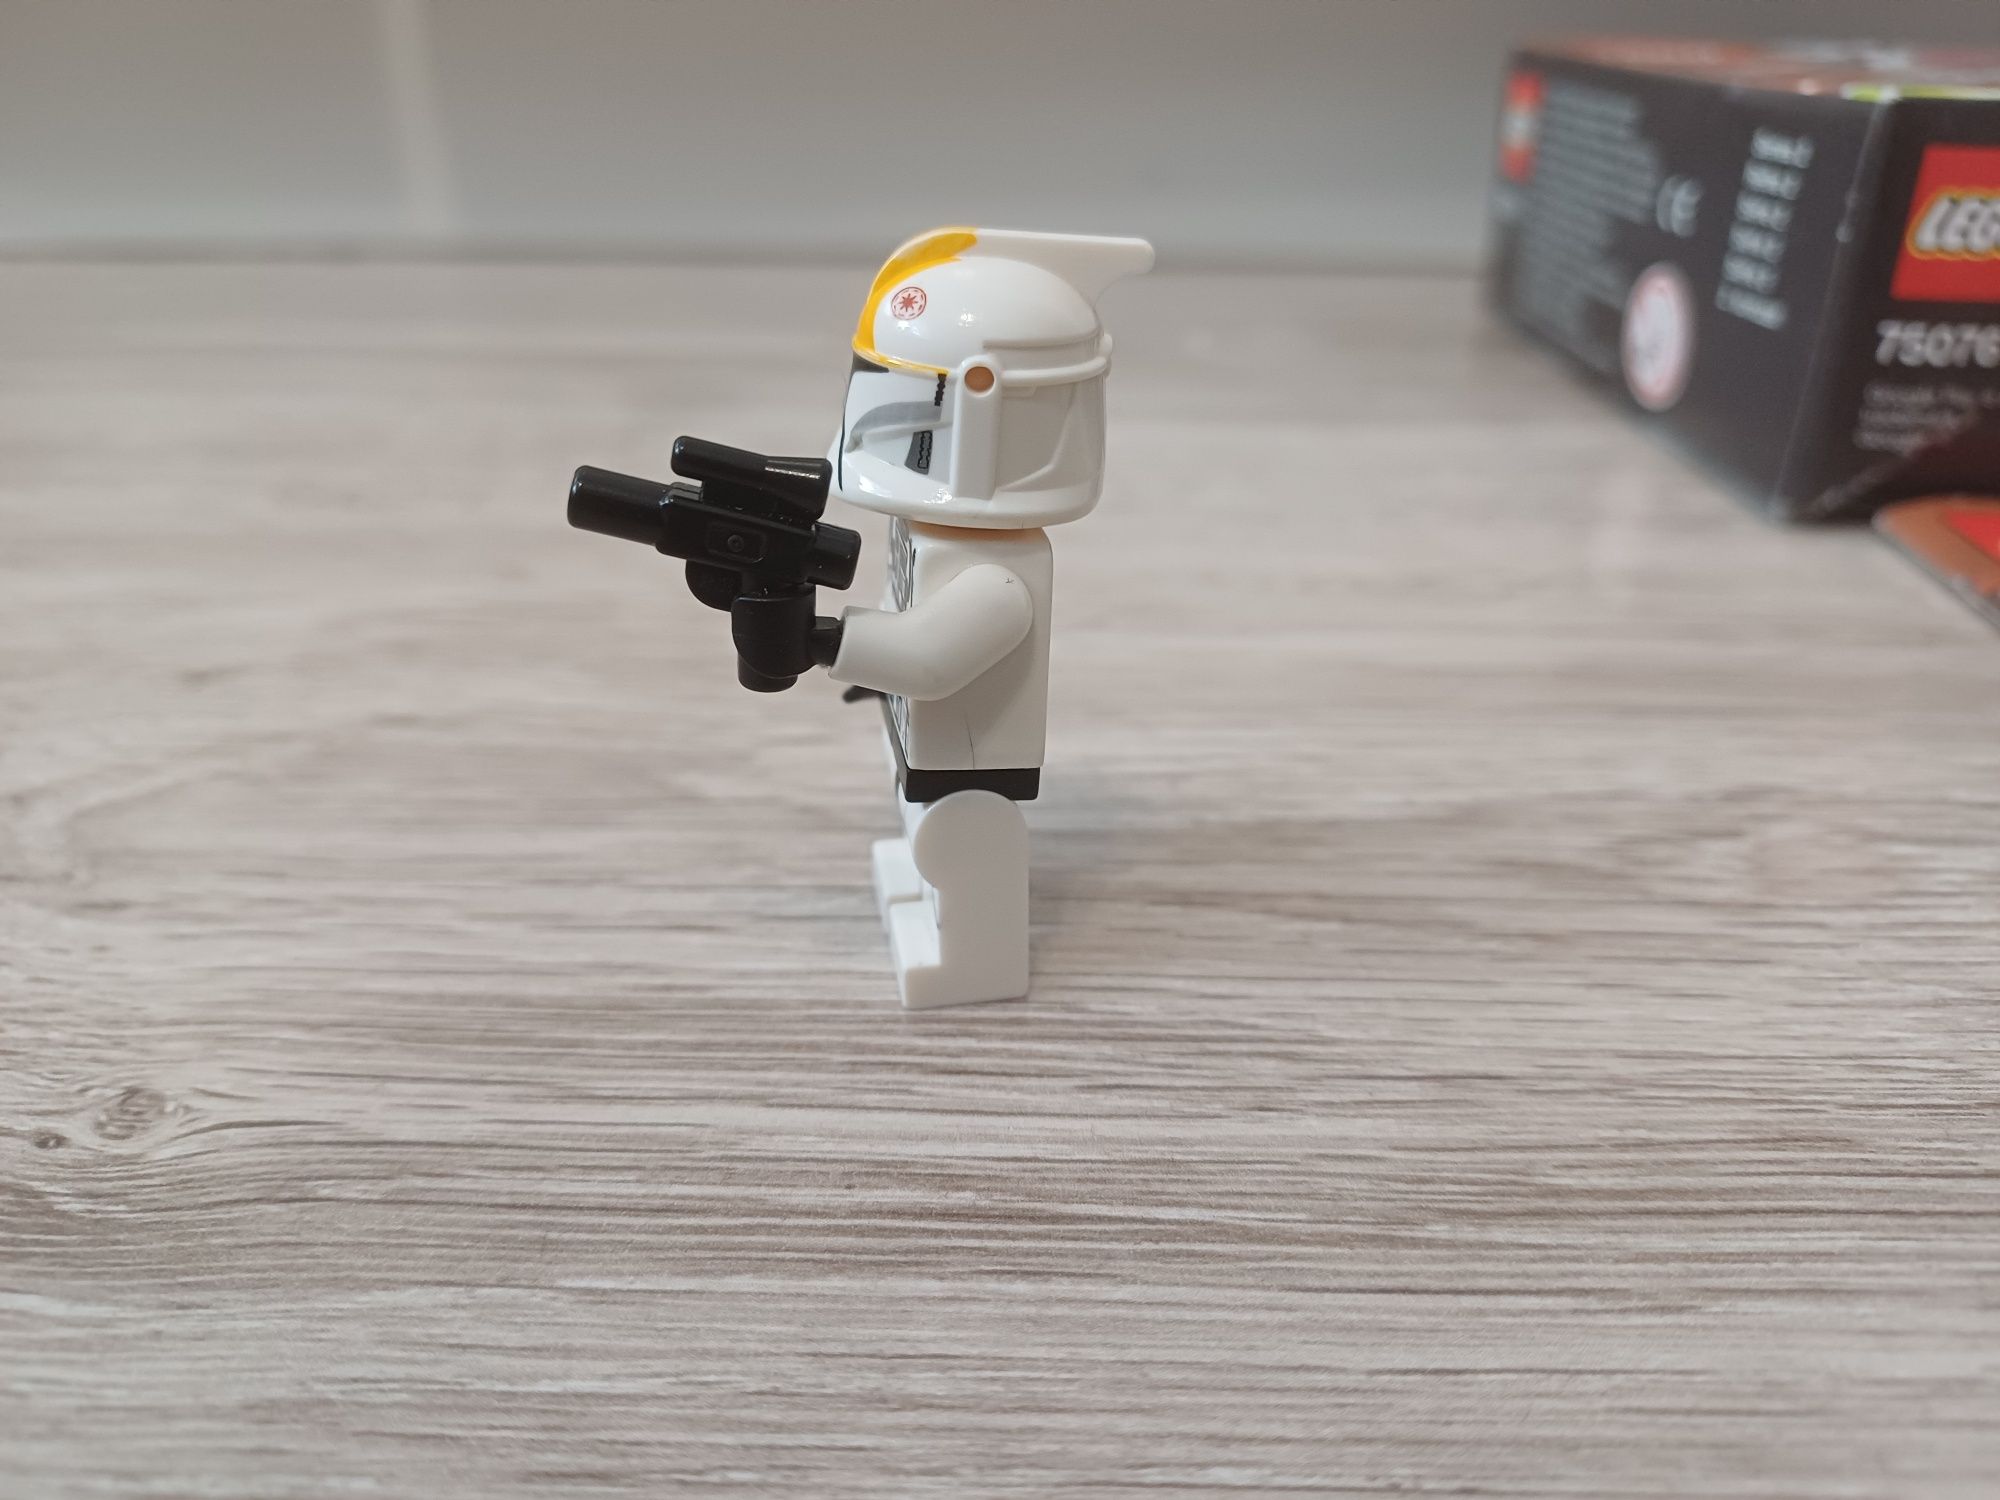 Lego star wars 75076 Republic gunship